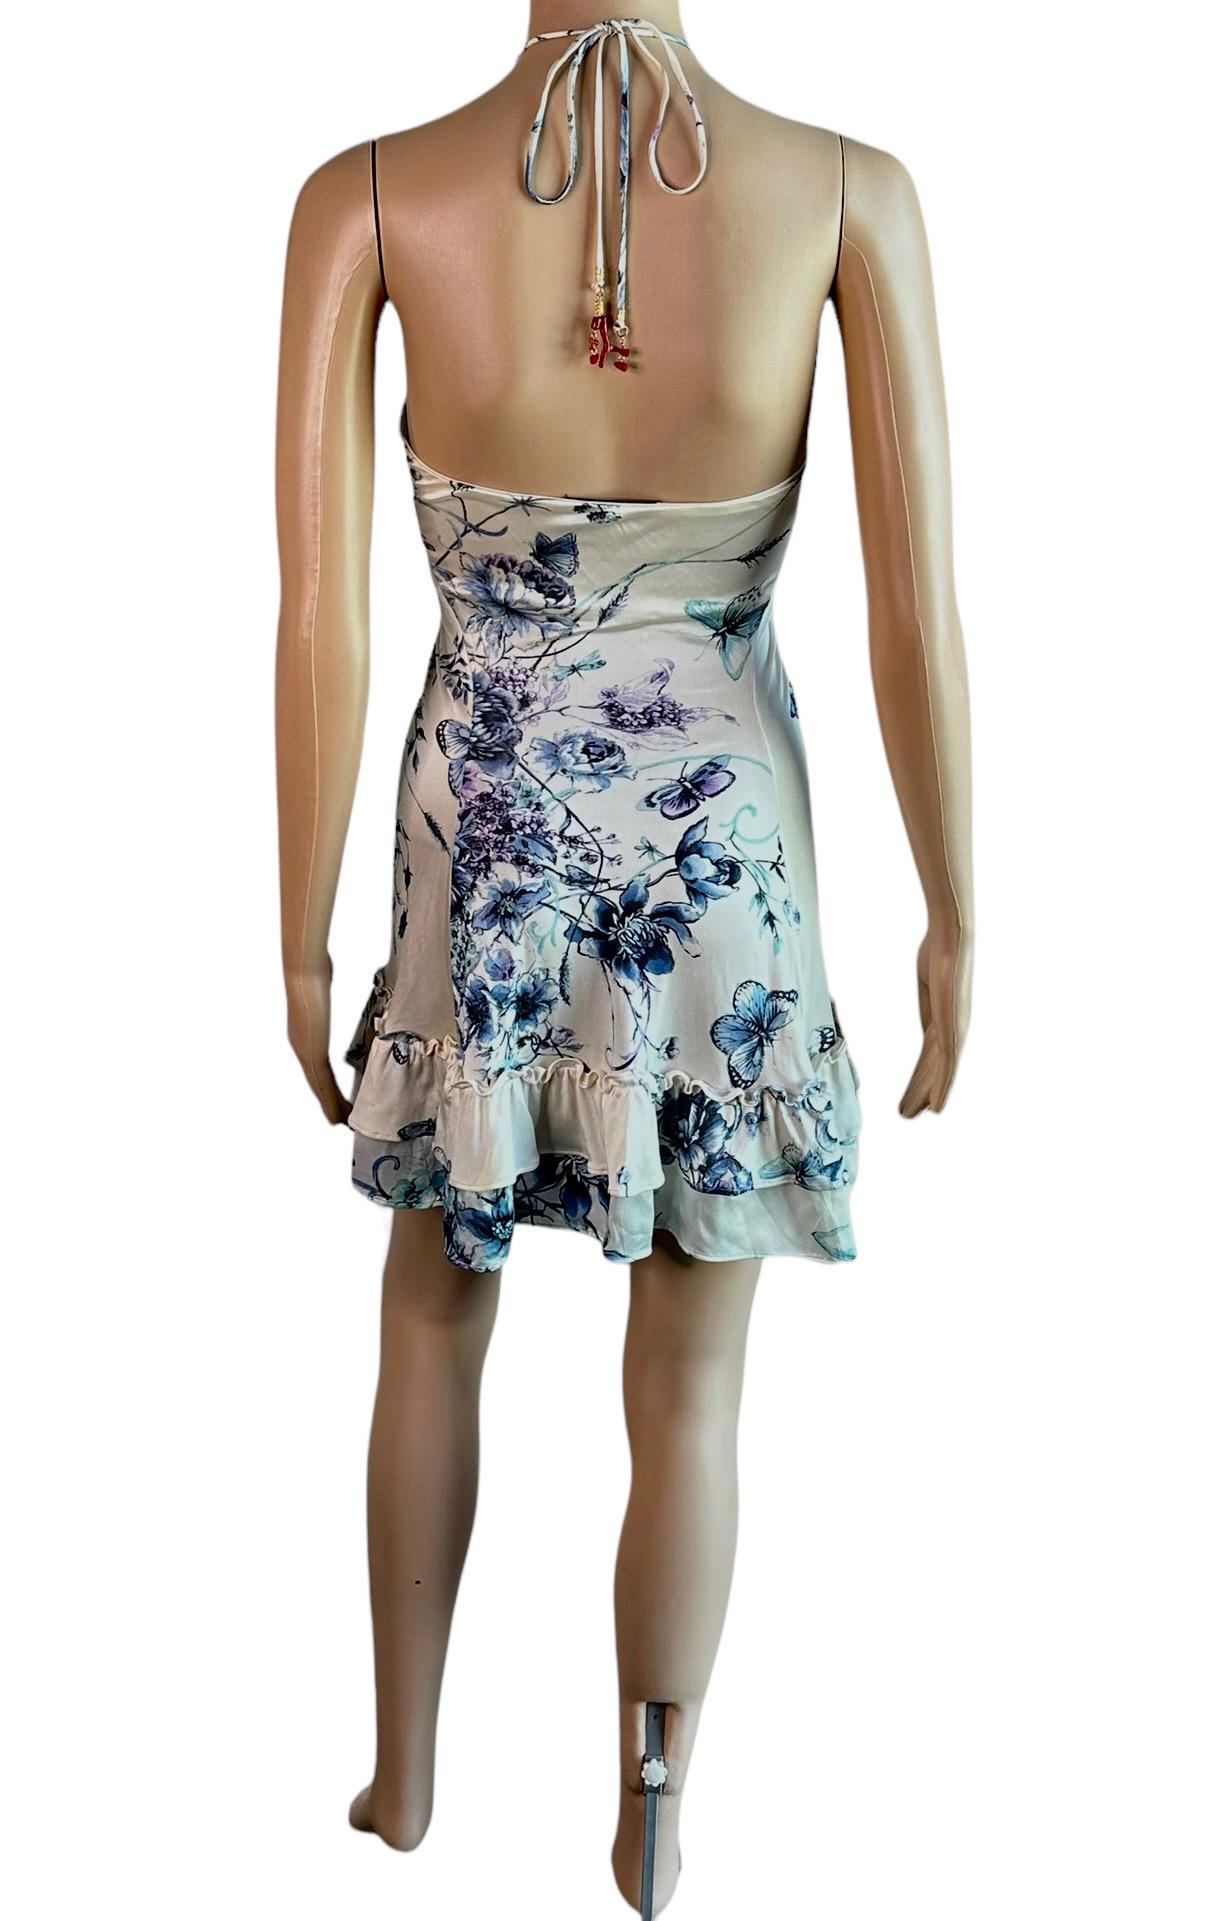 Roberto Cavalli S/S 2005 - Mini robe imprimée florale abstraite avec tatouage 2